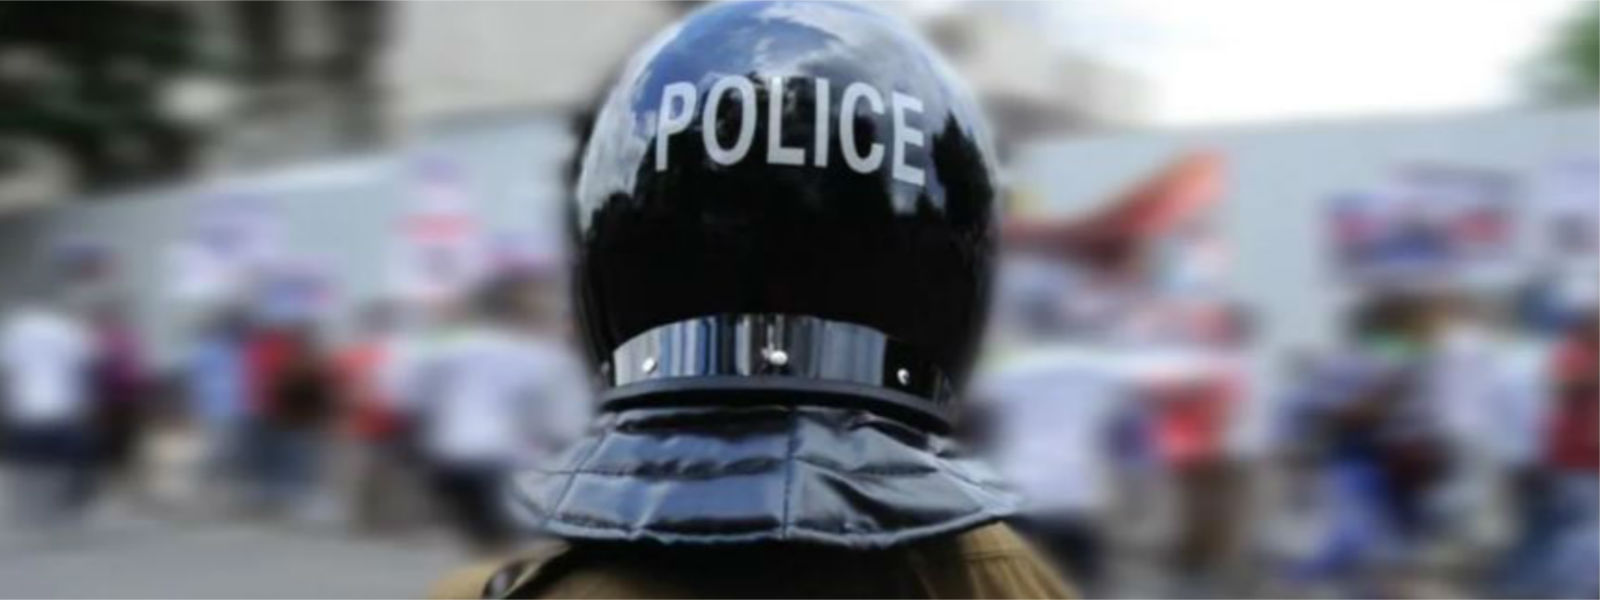 Police to seek tri-forces assistance in drug raids